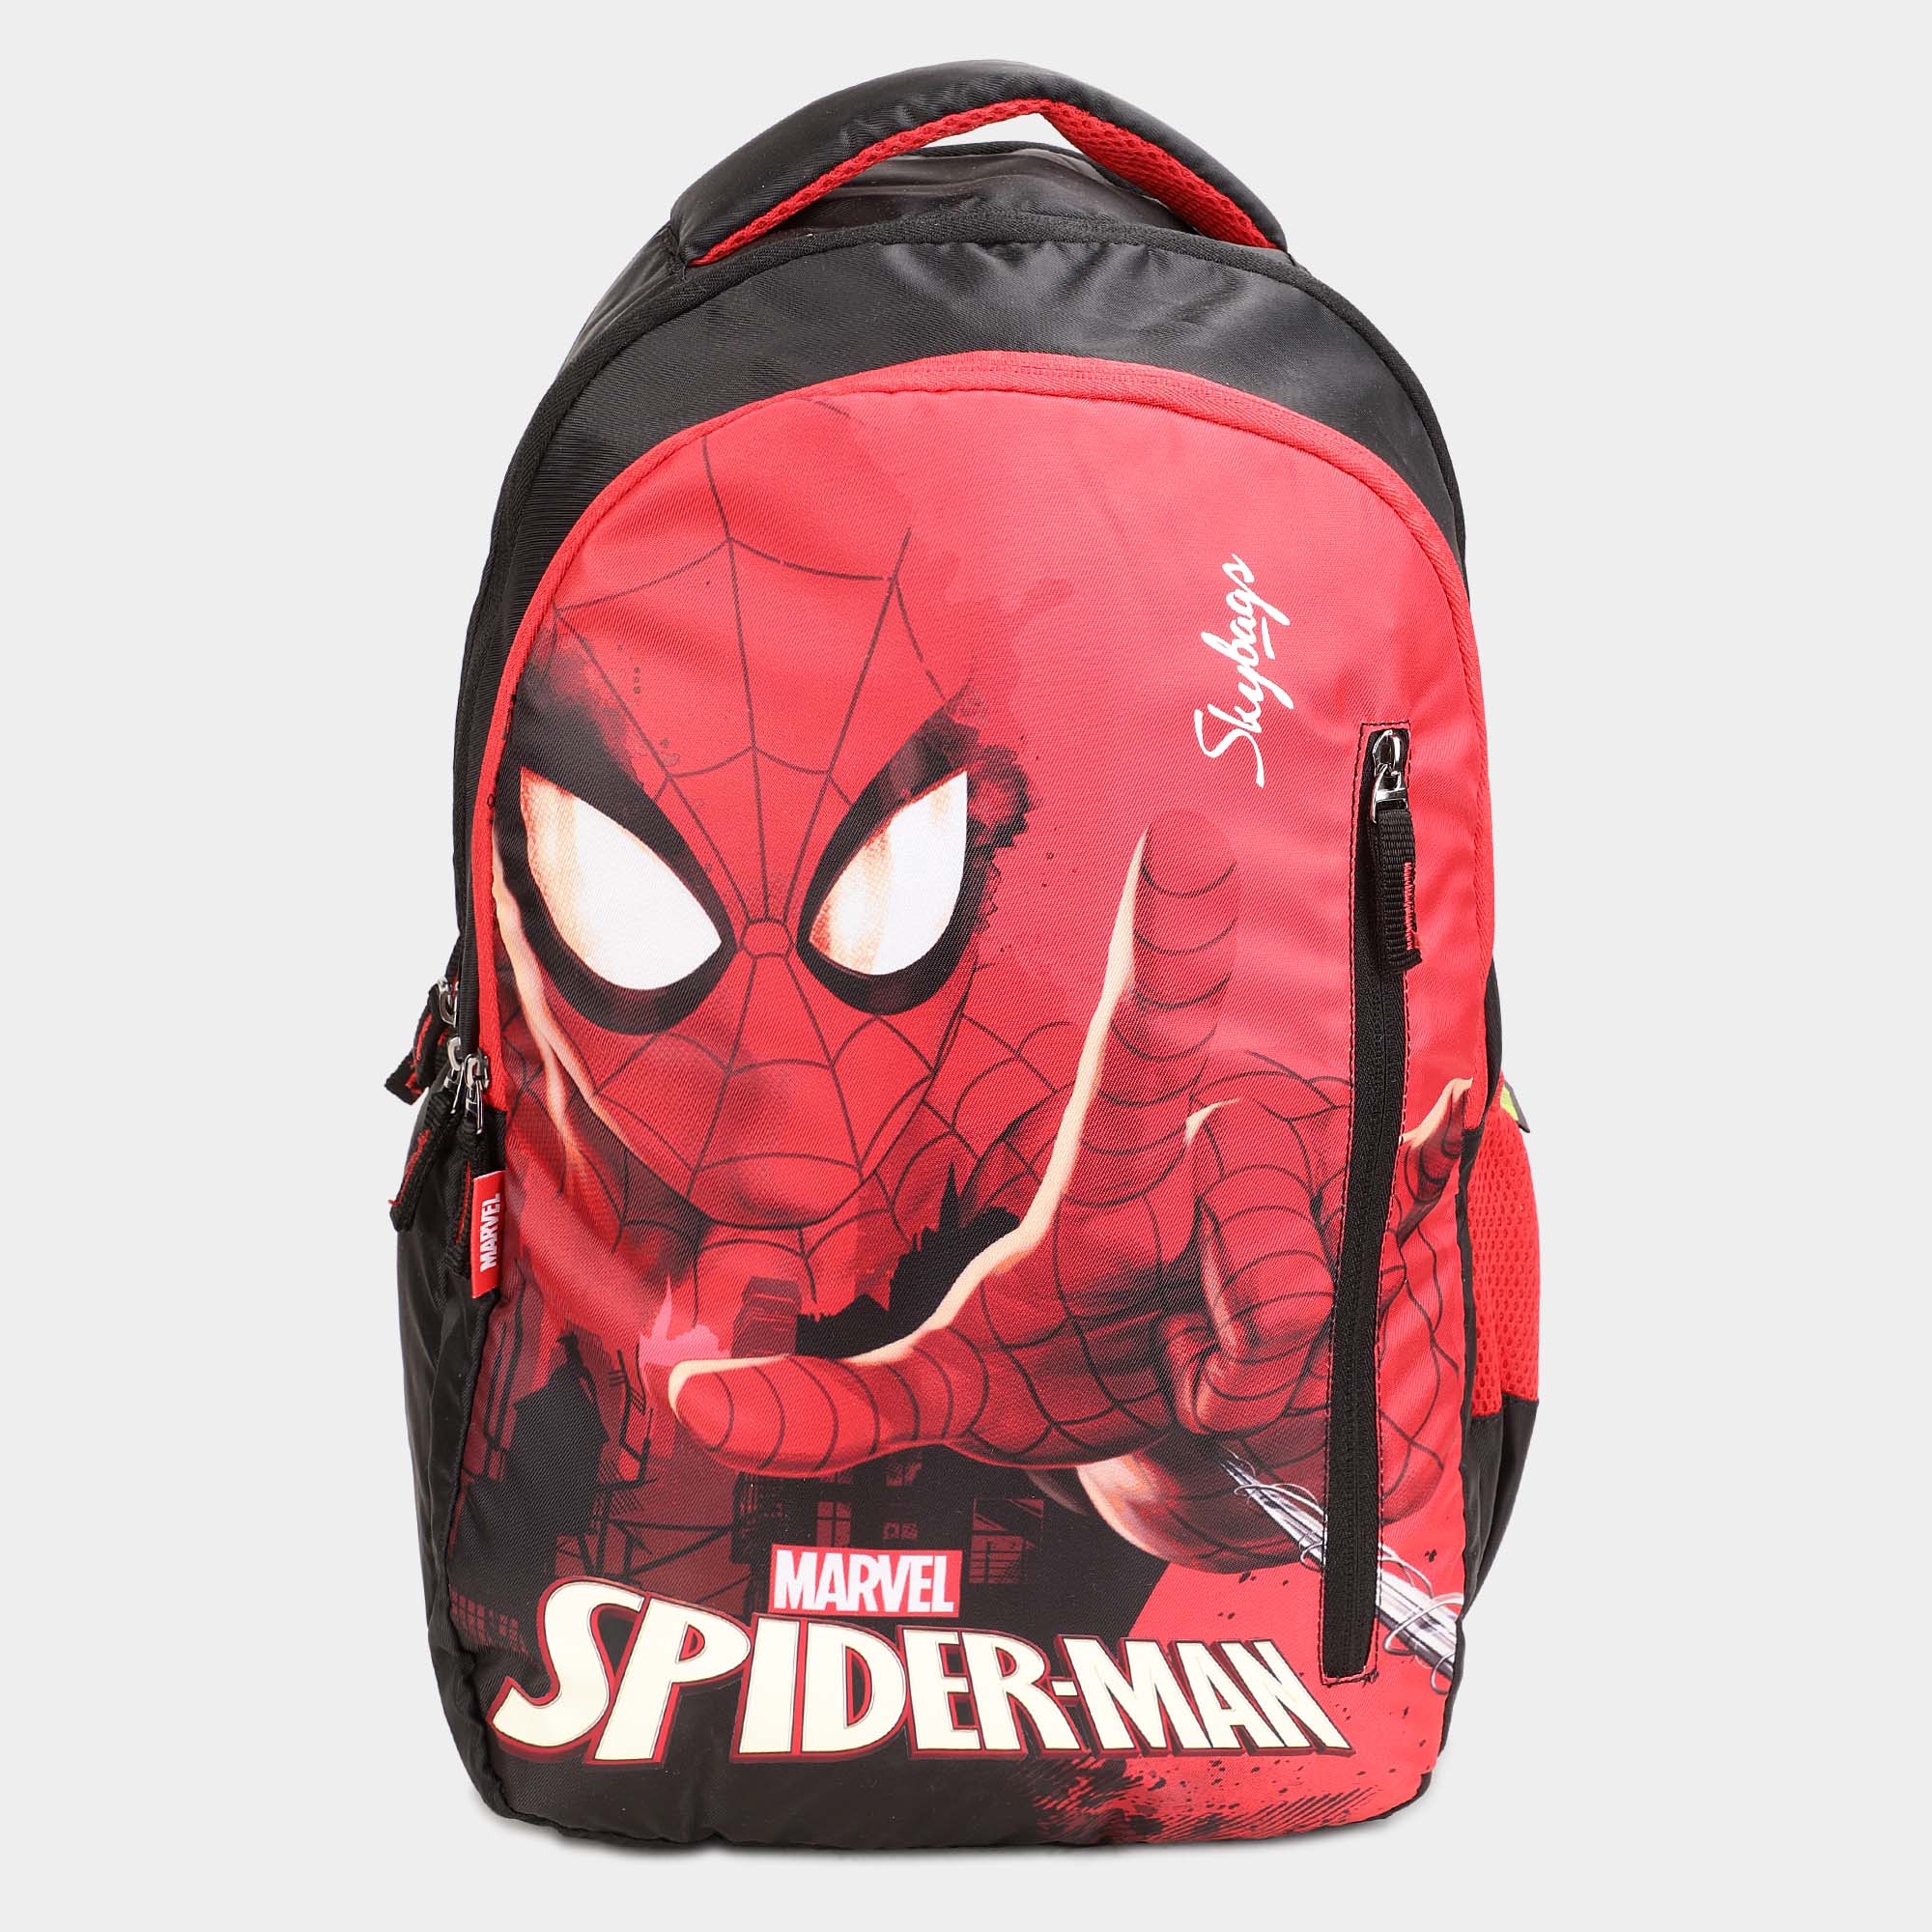 SKYBAGS MARVEL SPIDERMAN SCHOOL BACKPACK 02 30 L Backpack Red - Price in  India | Flipkart.com